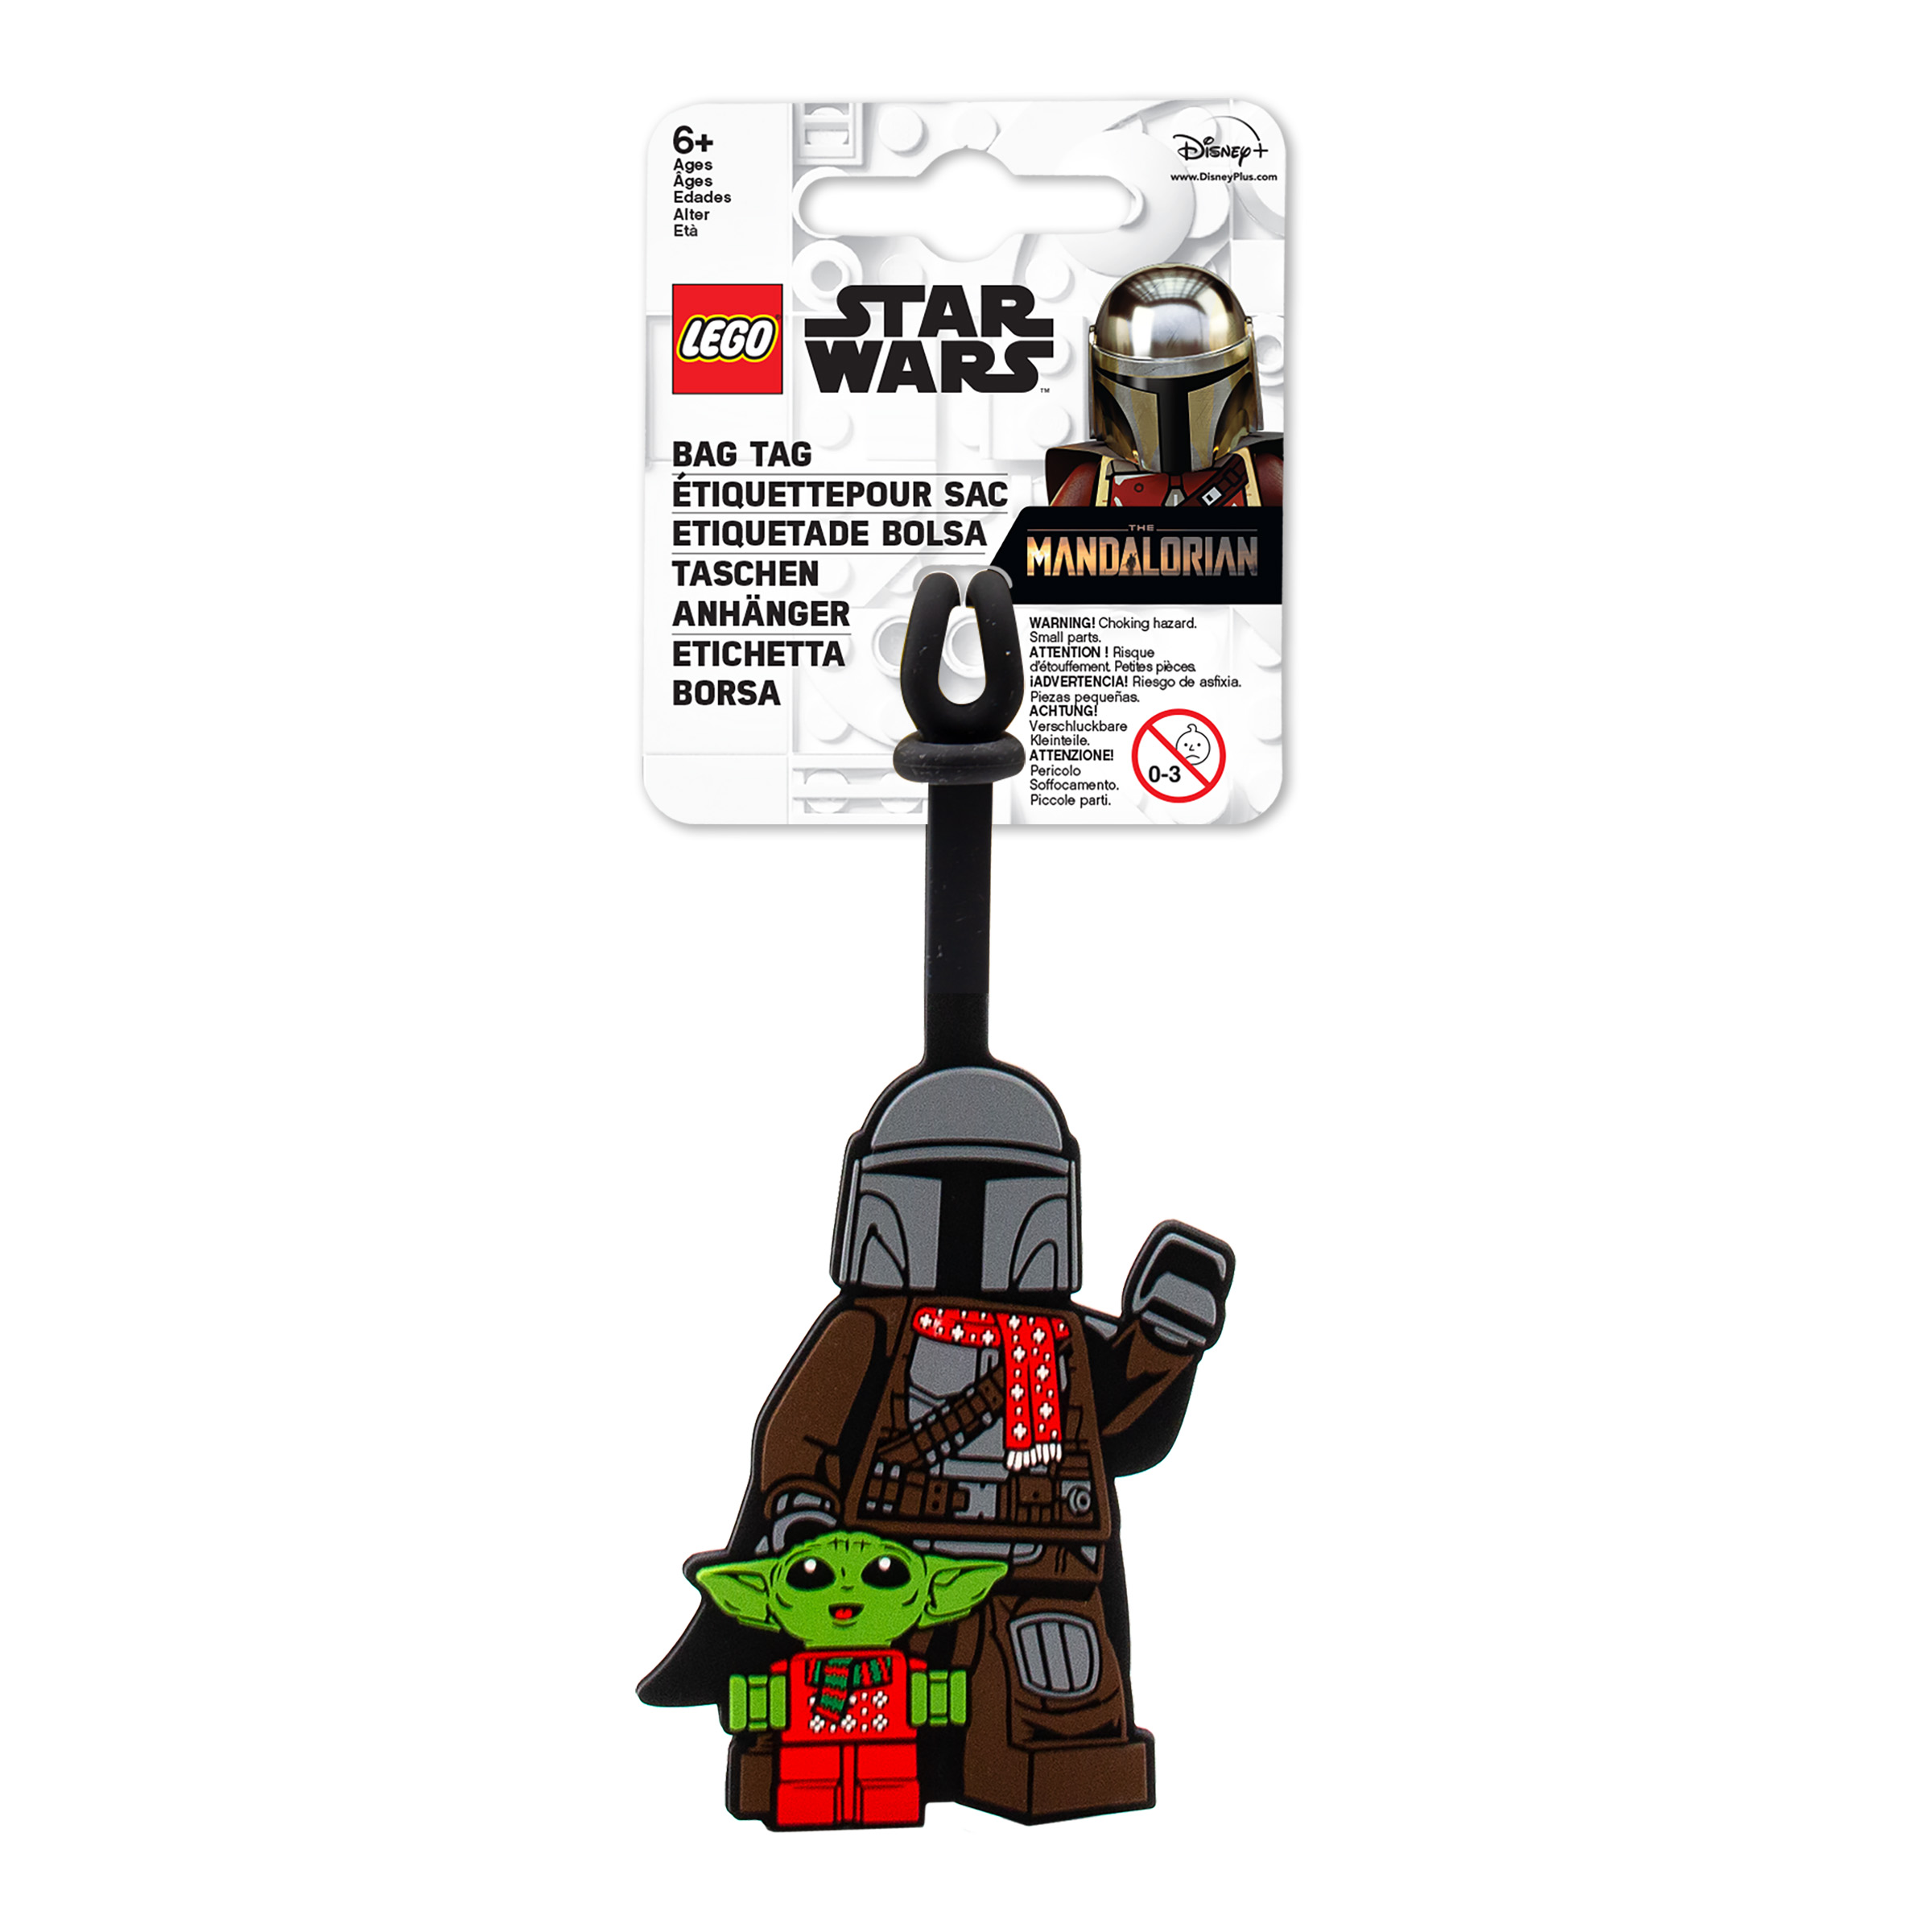 The Mandalorian™ with Grogu™ Bag Tag 5006367 - LEGO